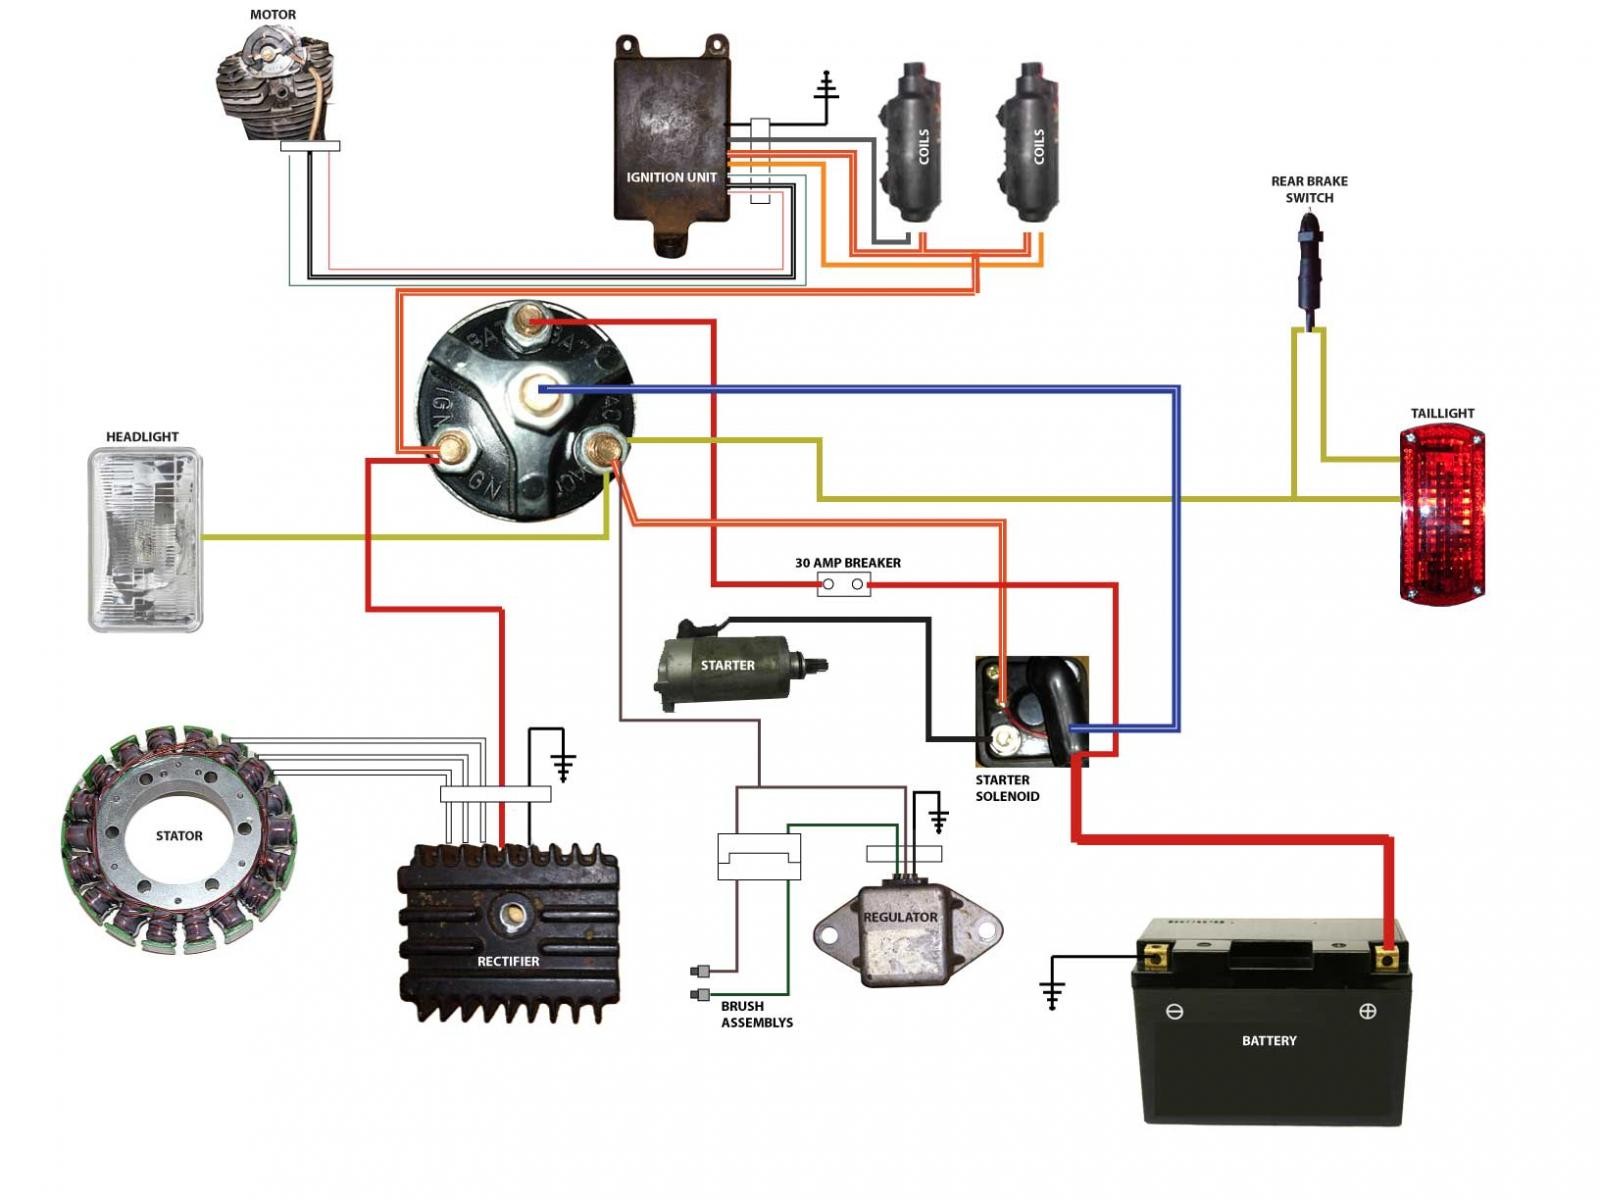 Harley Engine Diagram Also Honda Motorcycle Wiring Diagrams Honda Cb750 Bobber Wiring Of Harley Engine Diagram